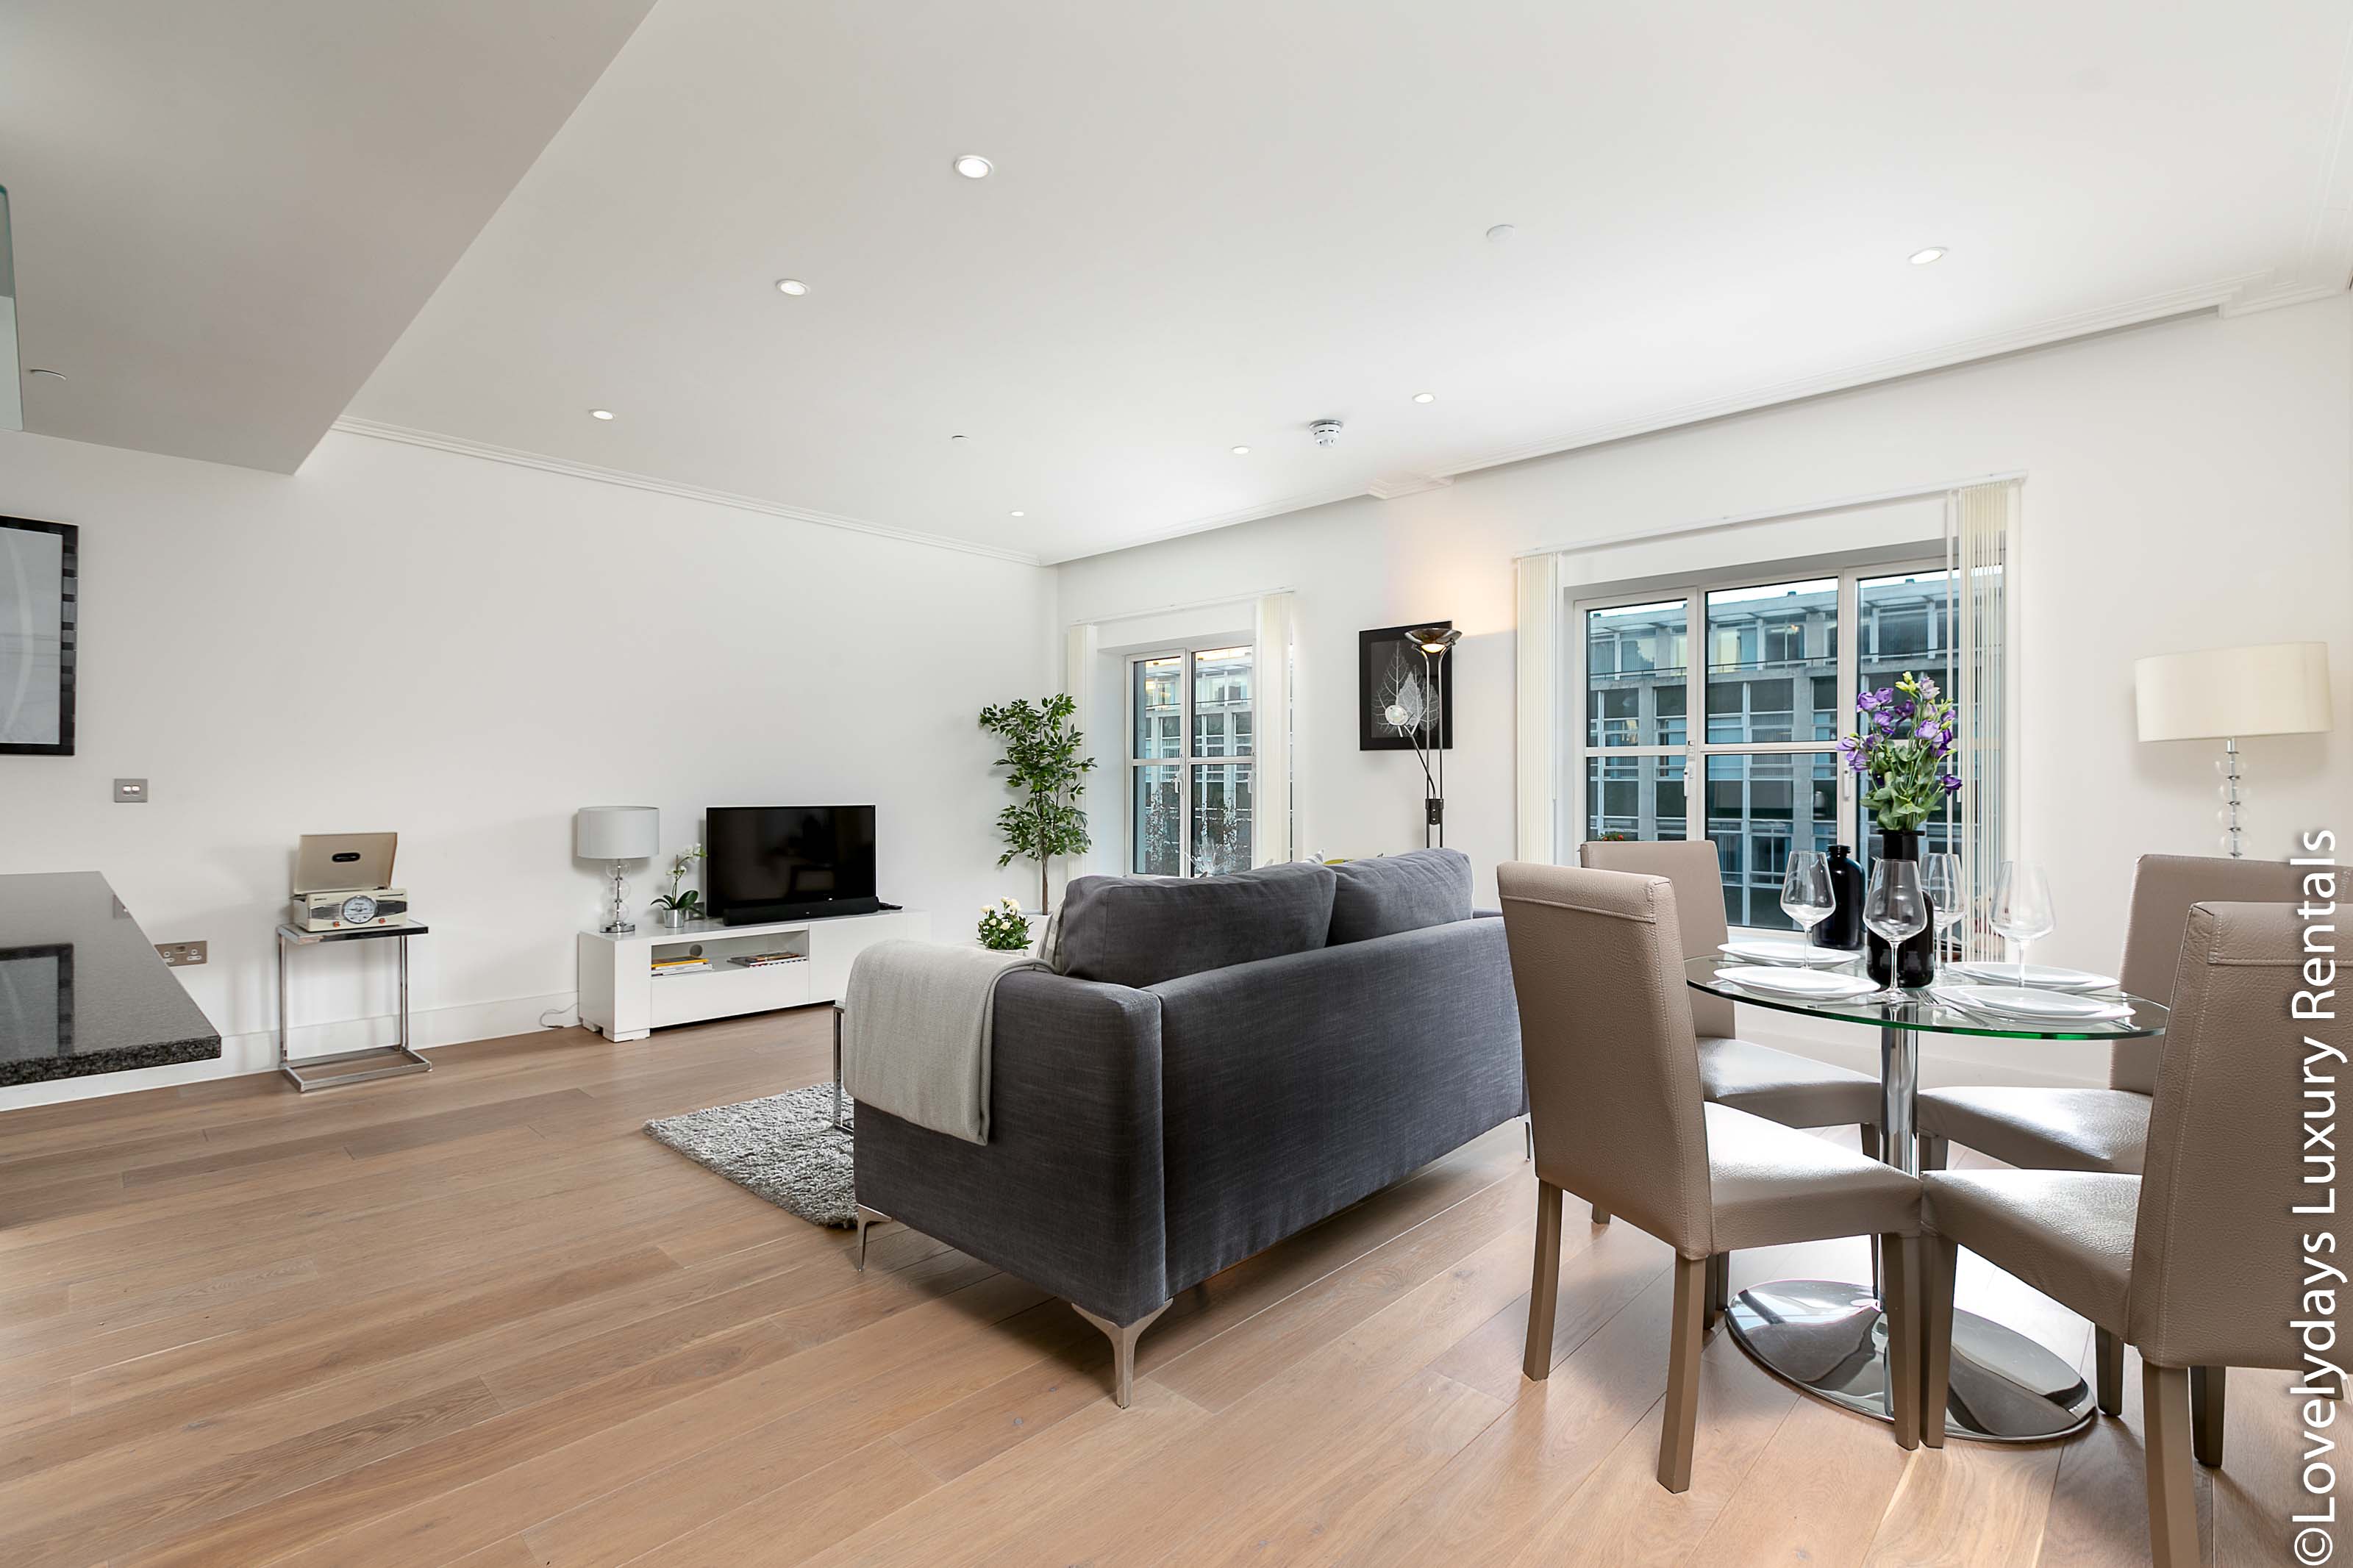 Lovelydays luxury service apartment rental - London - Covent Garden - Prince's House 603 - Lovelysuite - 2 bedrooms - 2 bathrooms - Luxury living room - Panoramic view - 48195f528f83 - Lovelydays